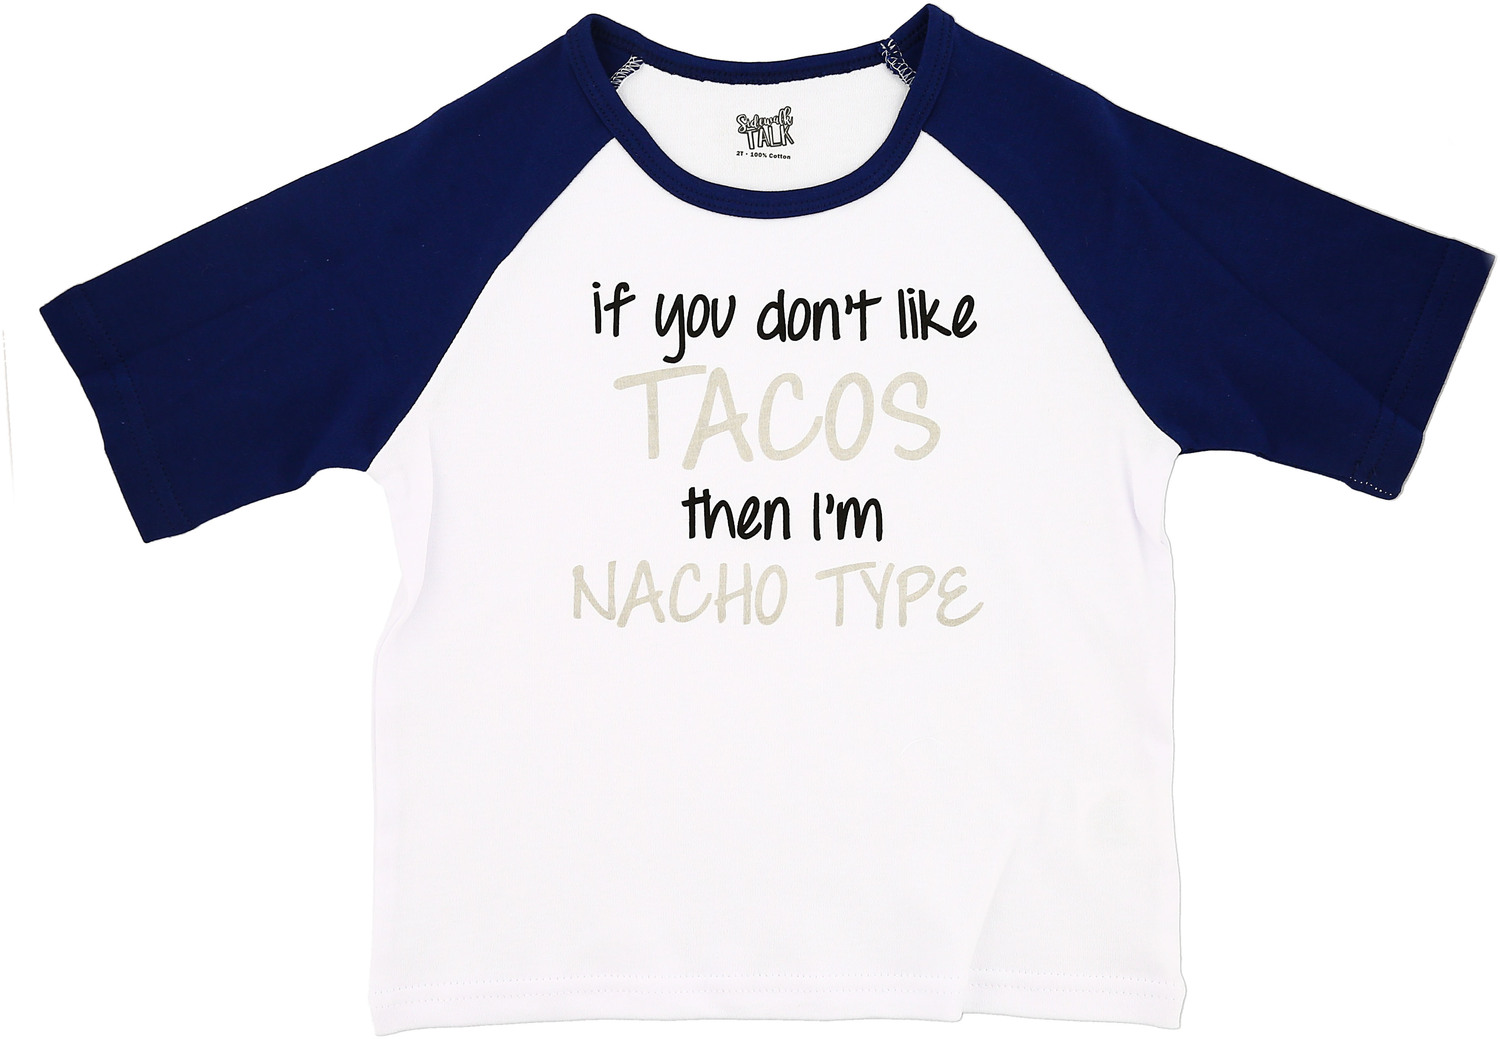 Nacho Type by Sidewalk Talk - Nacho Type - 2T 3/4 Length Navy Sleeve Shirt